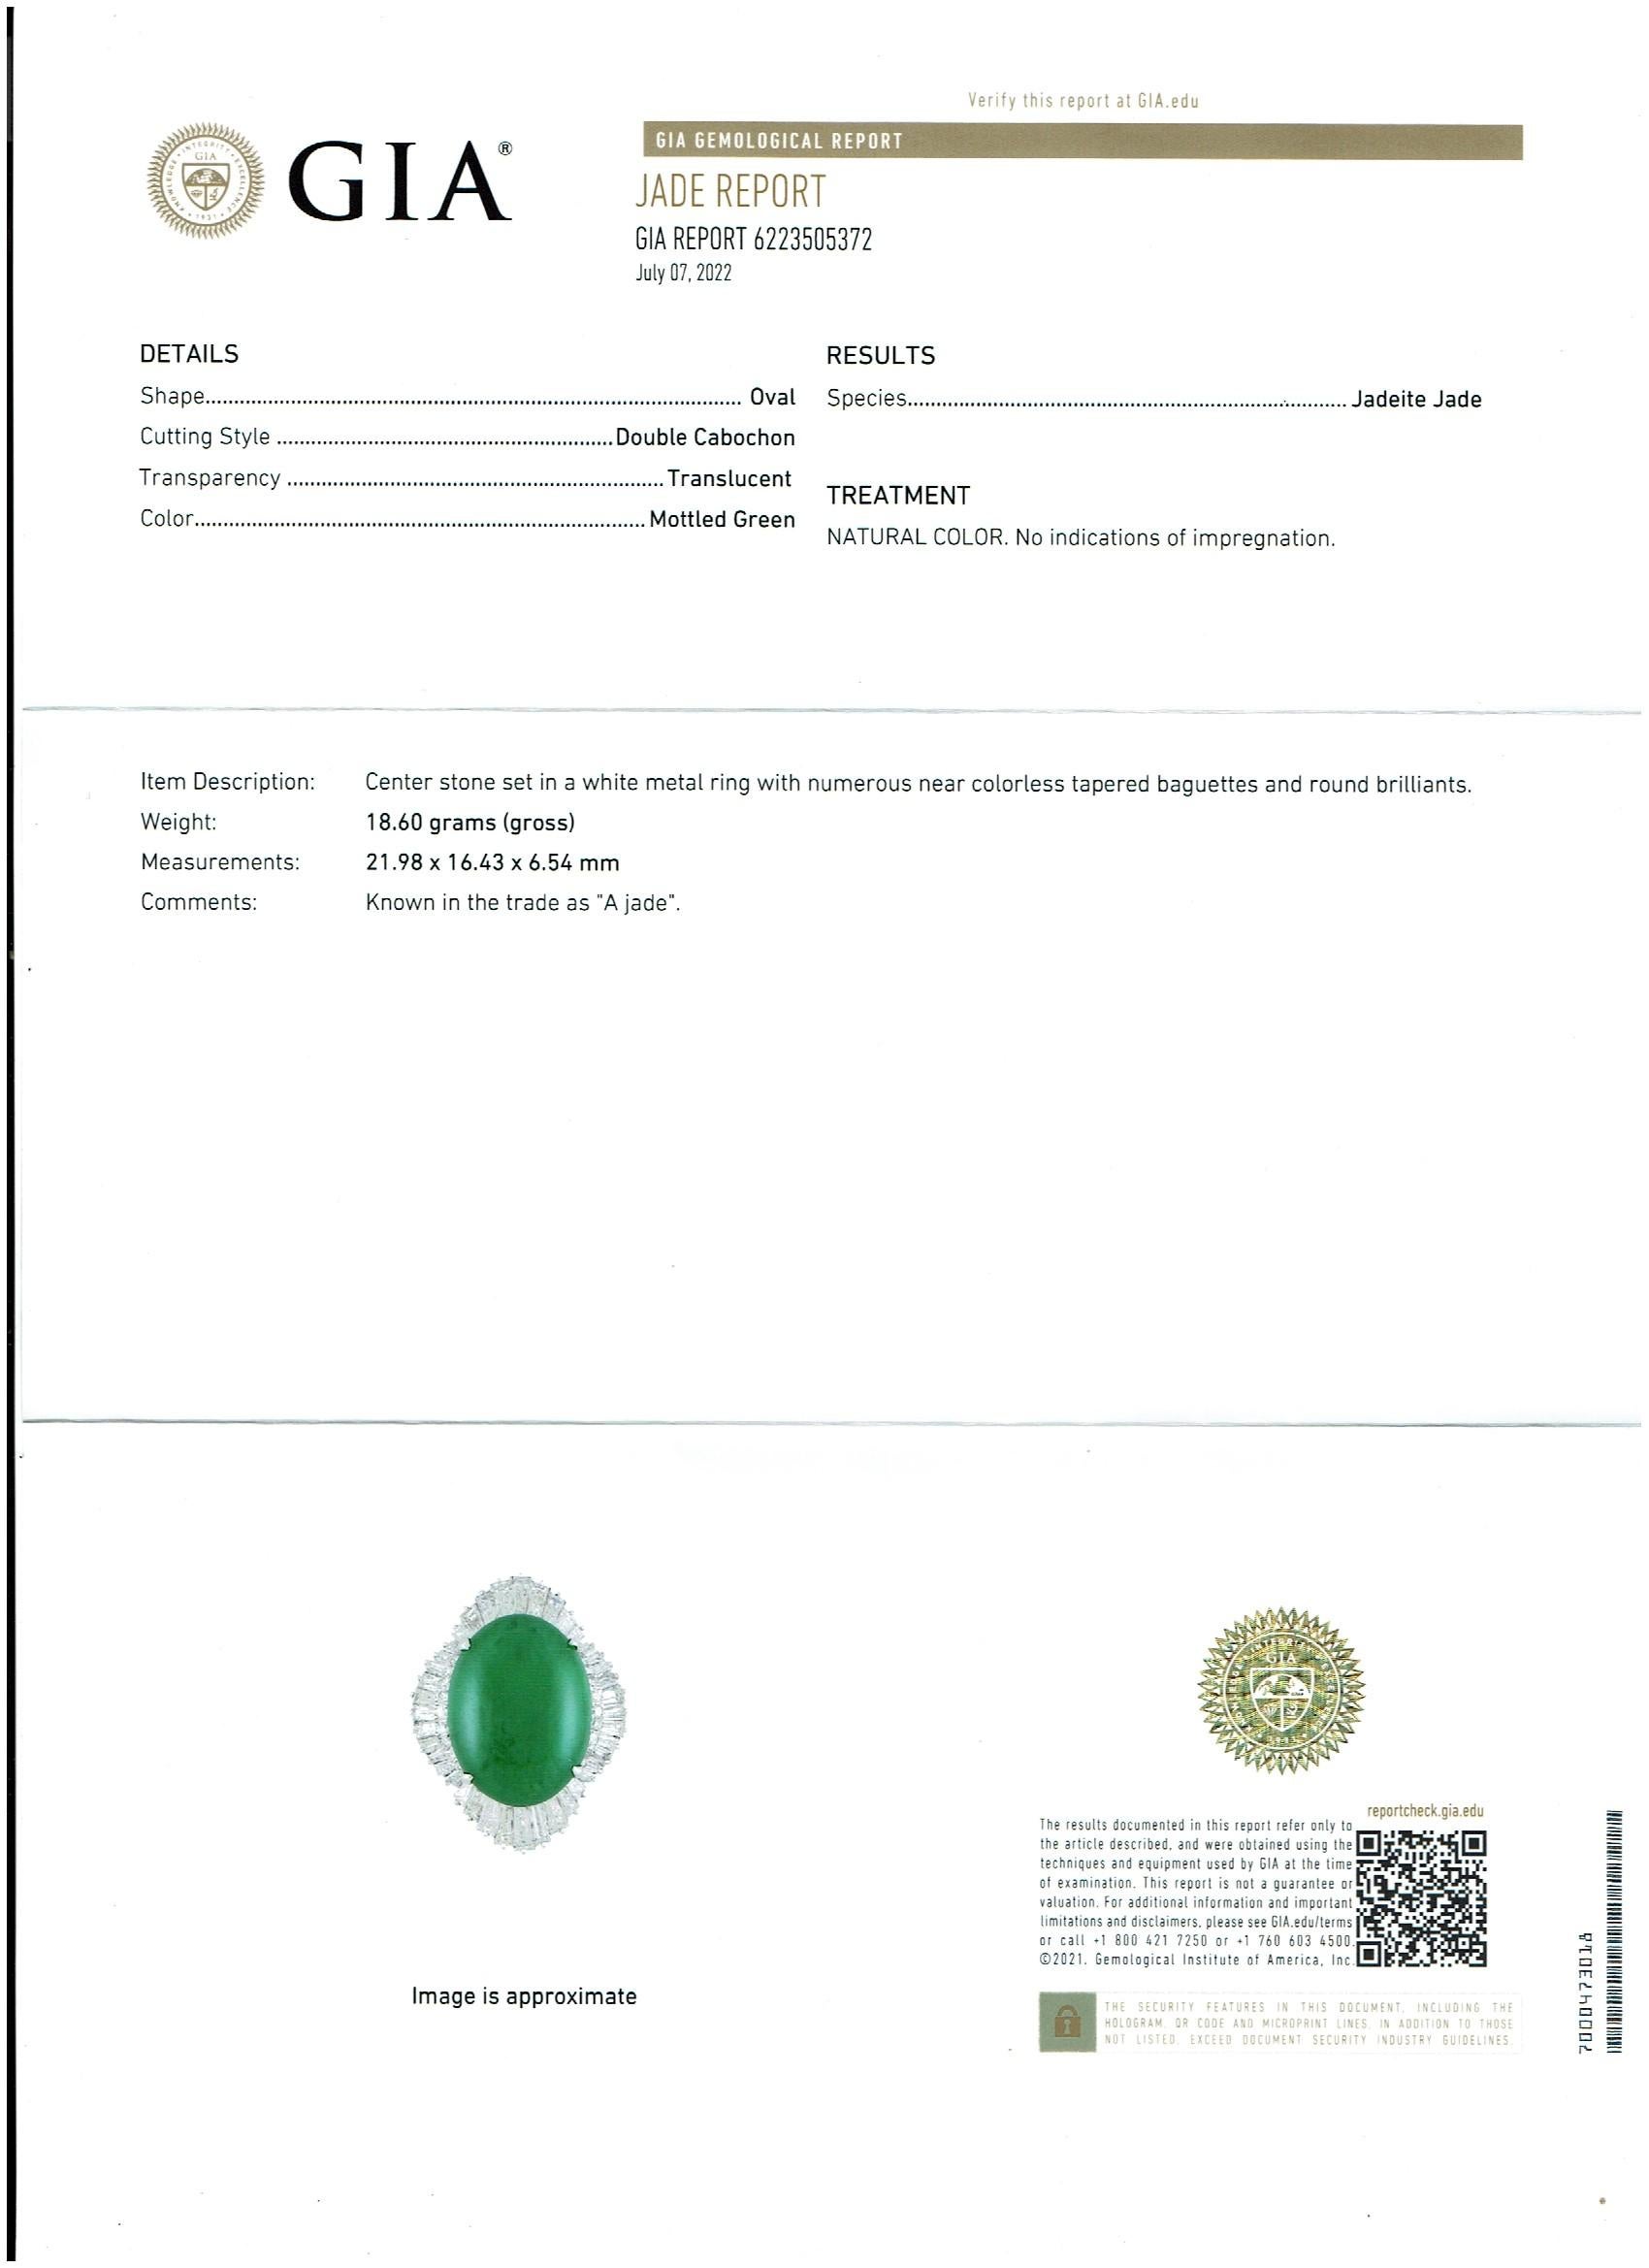 Oval Cut GIA Certified 23 Carat Jadeite Jade +4.5ct Diamond Cocktail Ring Platinum Estate For Sale